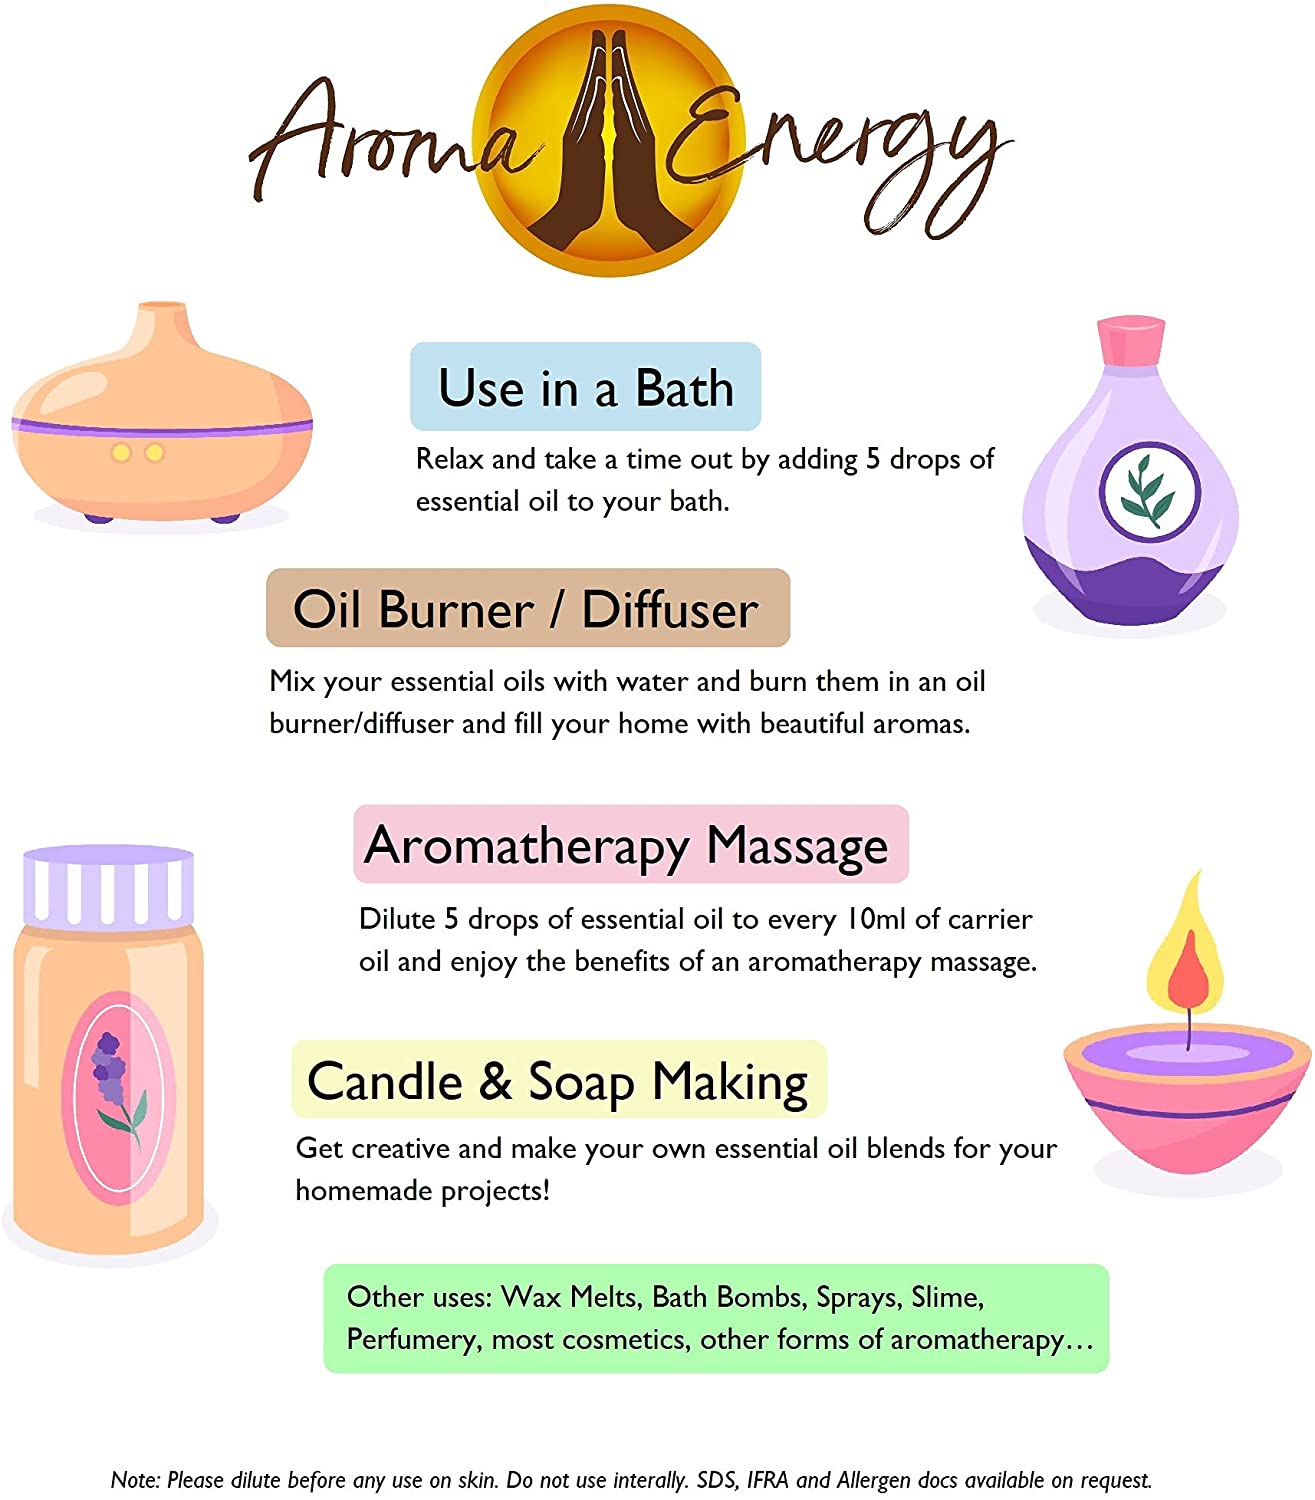 Sweet Birch Essential Oil (White Birch) - Aroma Energy